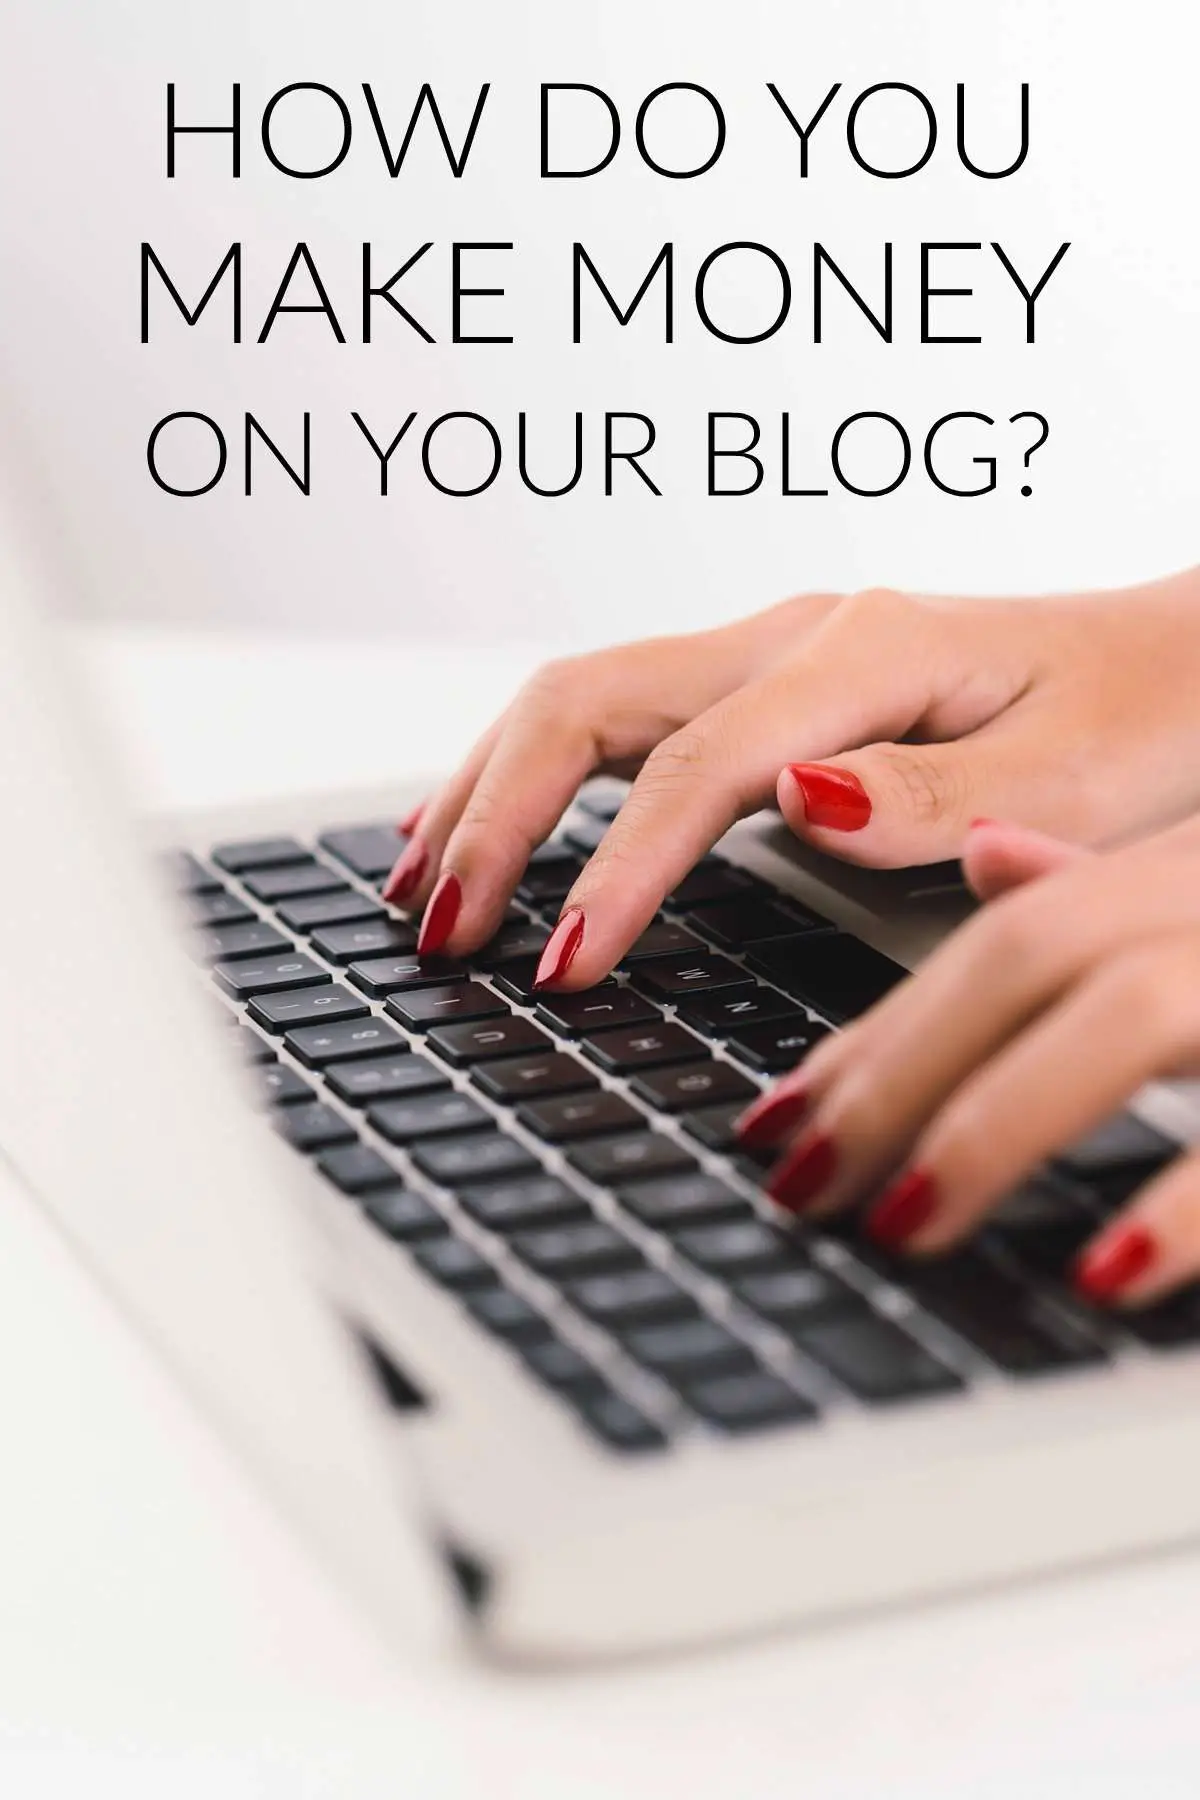 How Do You Make Money on Your Blog?